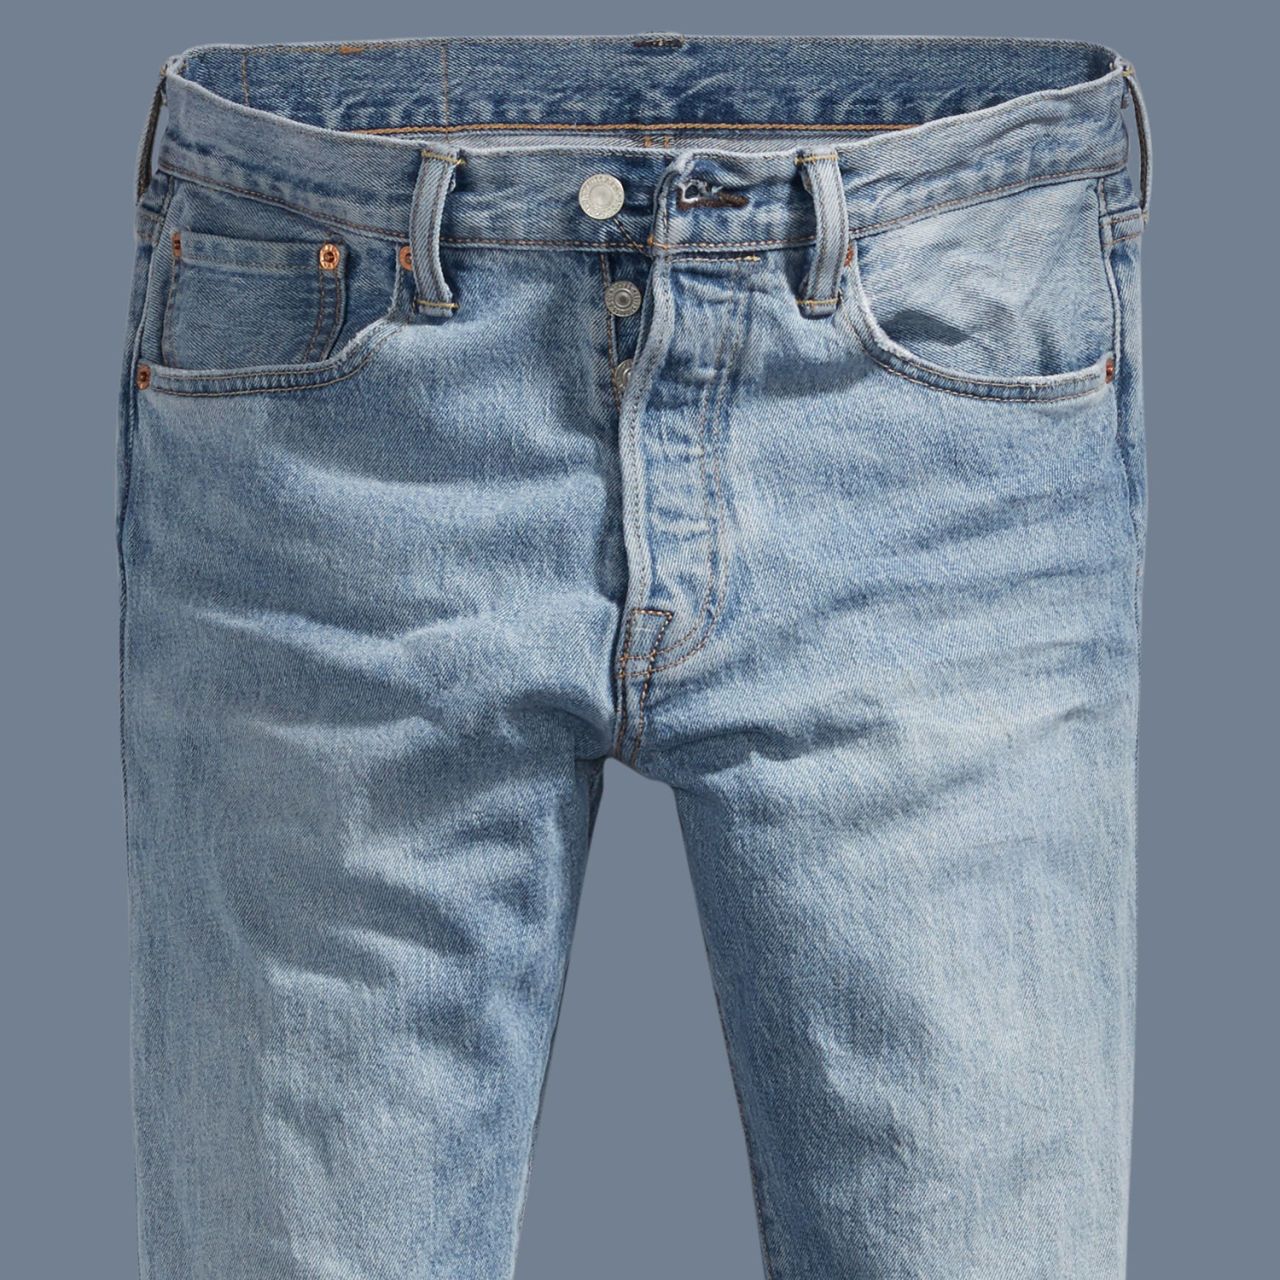 Aggregate more than 140 best levis jeans super hot